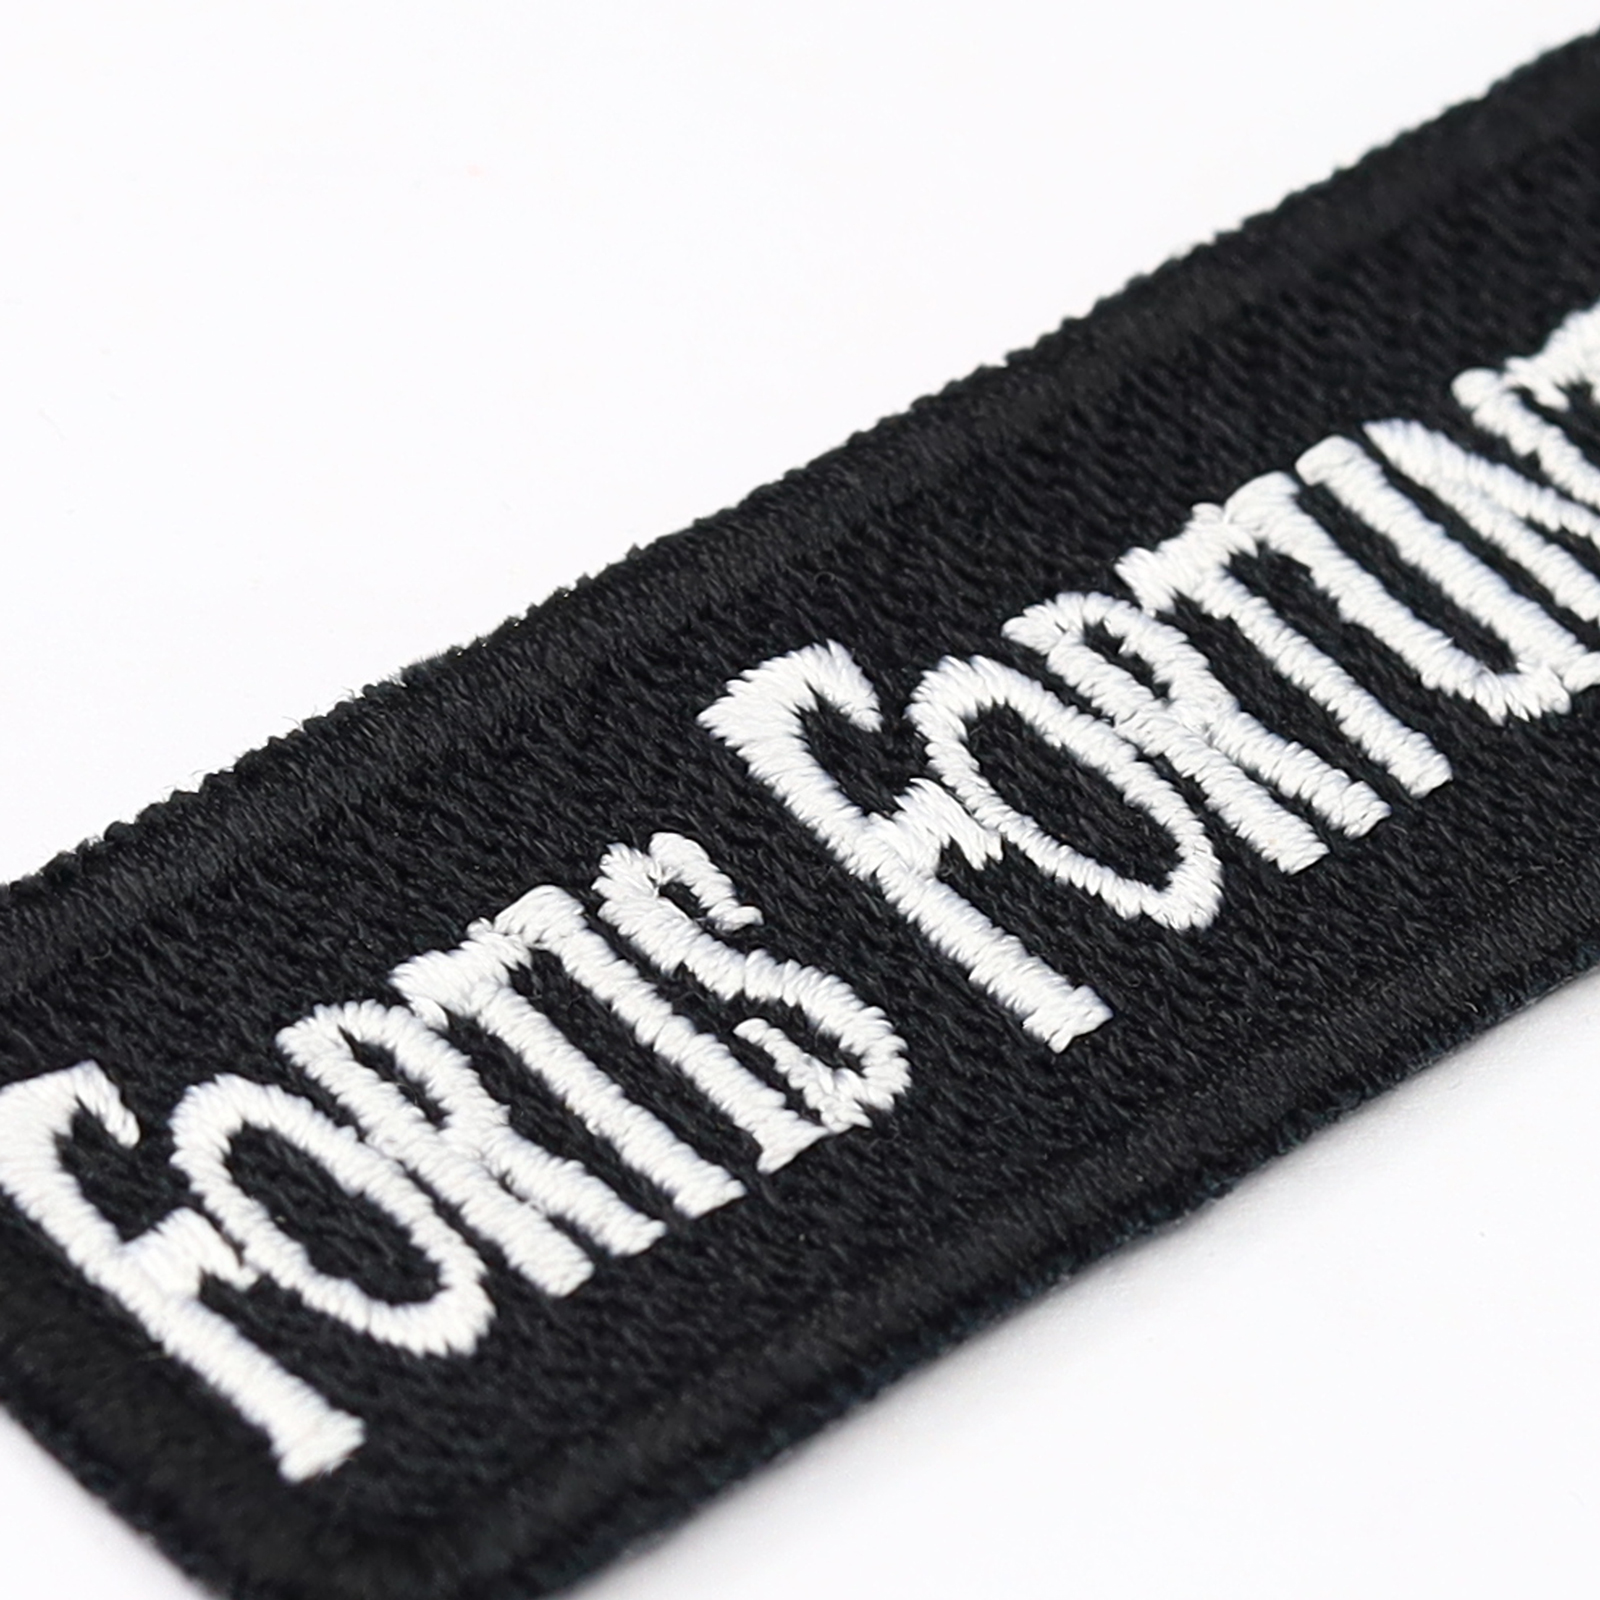 Fortis Fortuna Adiuvat - Patch